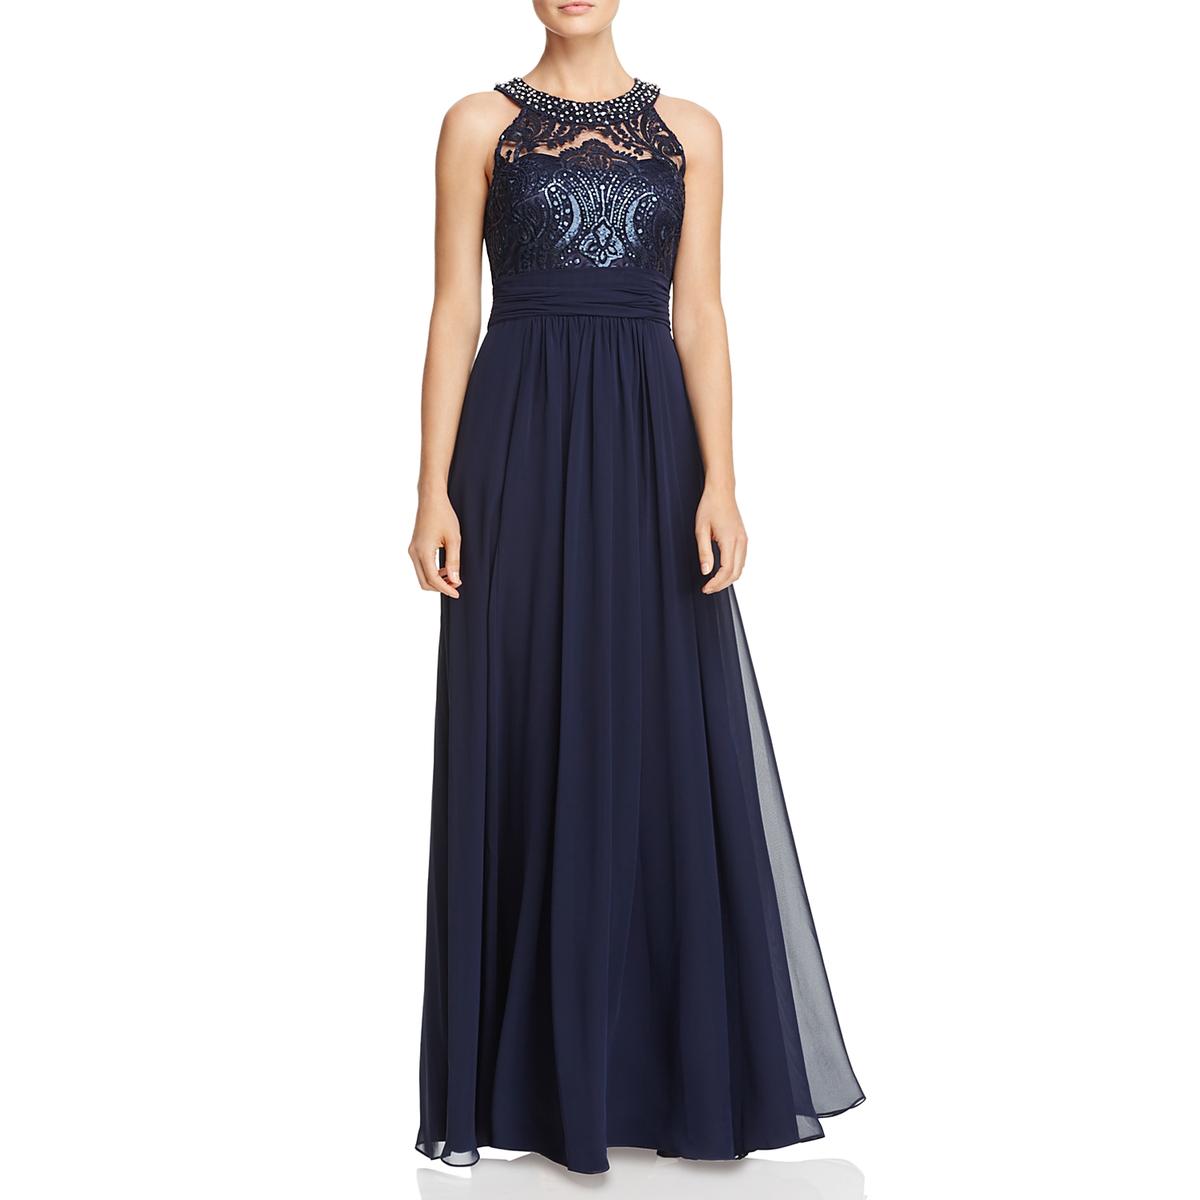 Eliza J Womens Sleeveless Full-Length Evening Dress Gown BHFO 9087 | eBay